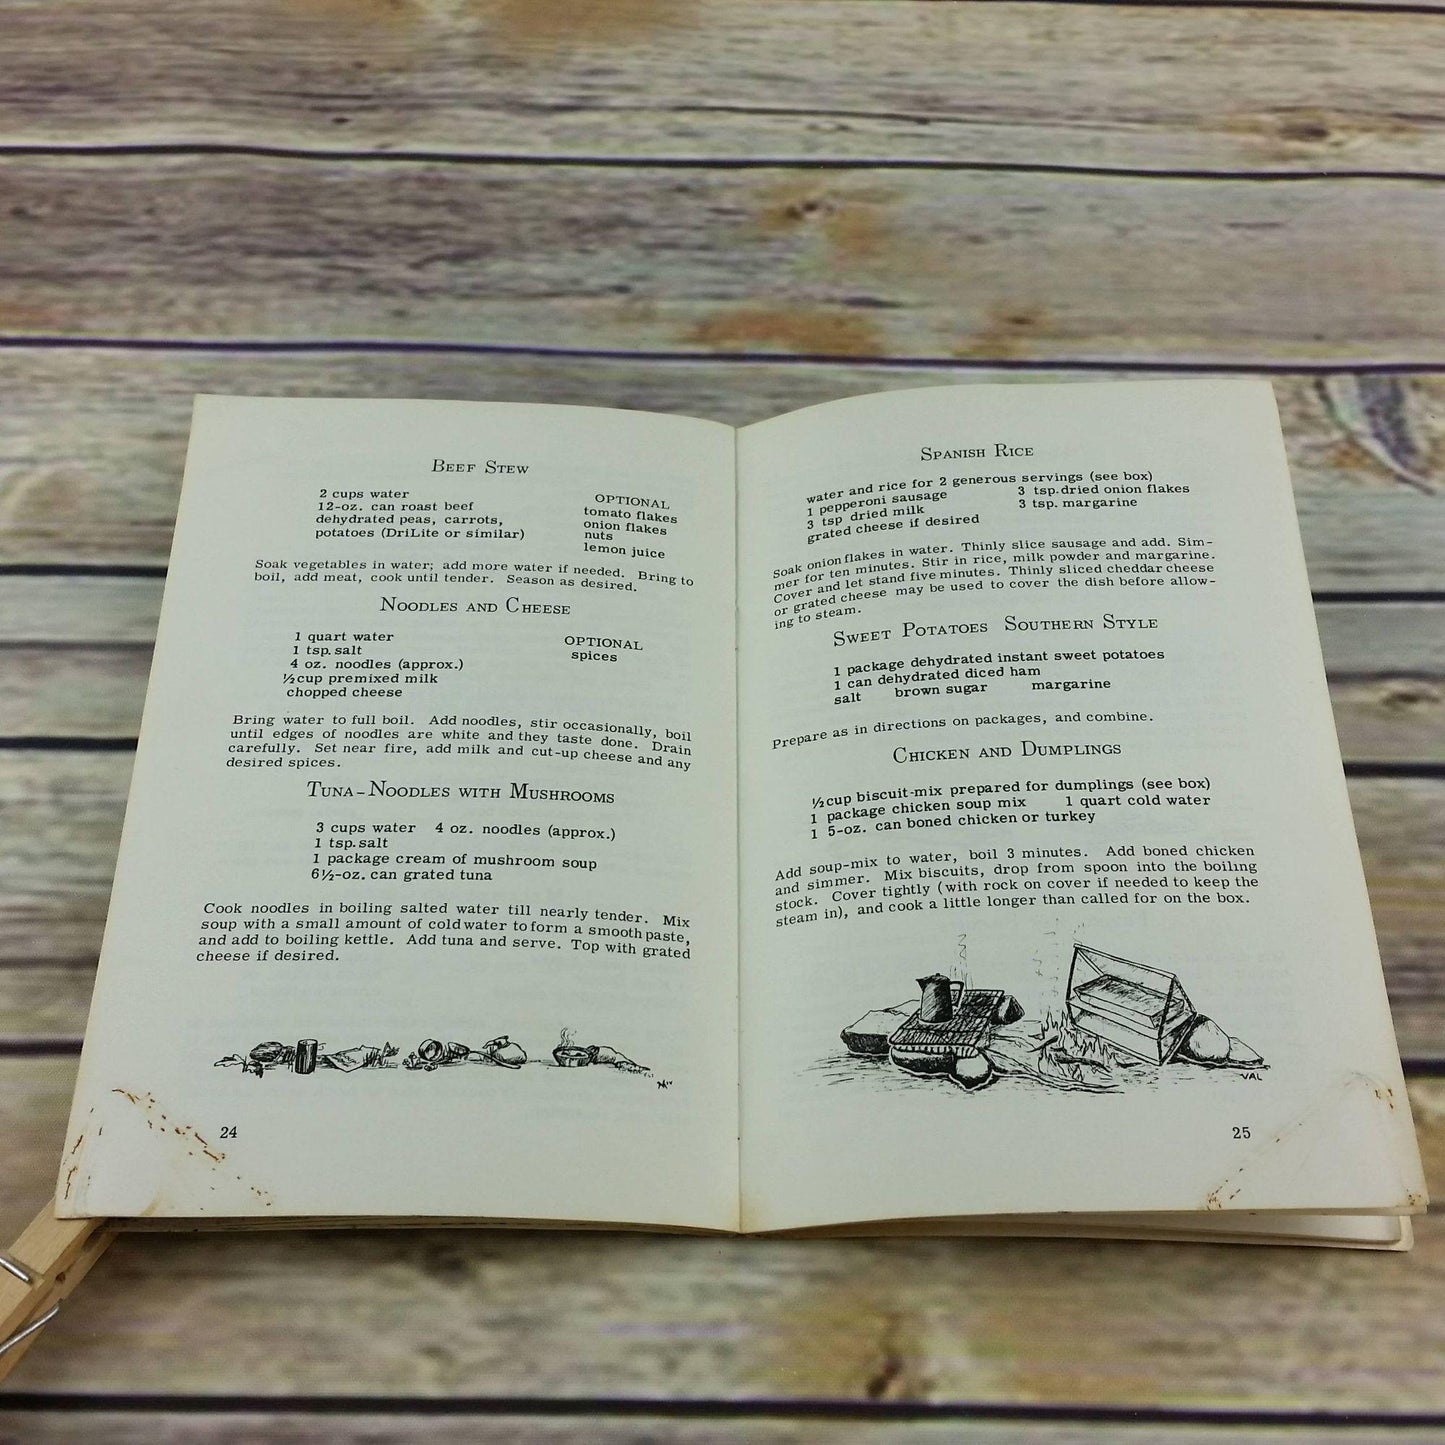 Vintage Cookbook Backpack Cookery Camping Hiking 1966 La Siesta Press Ruth Mendenhall 60s